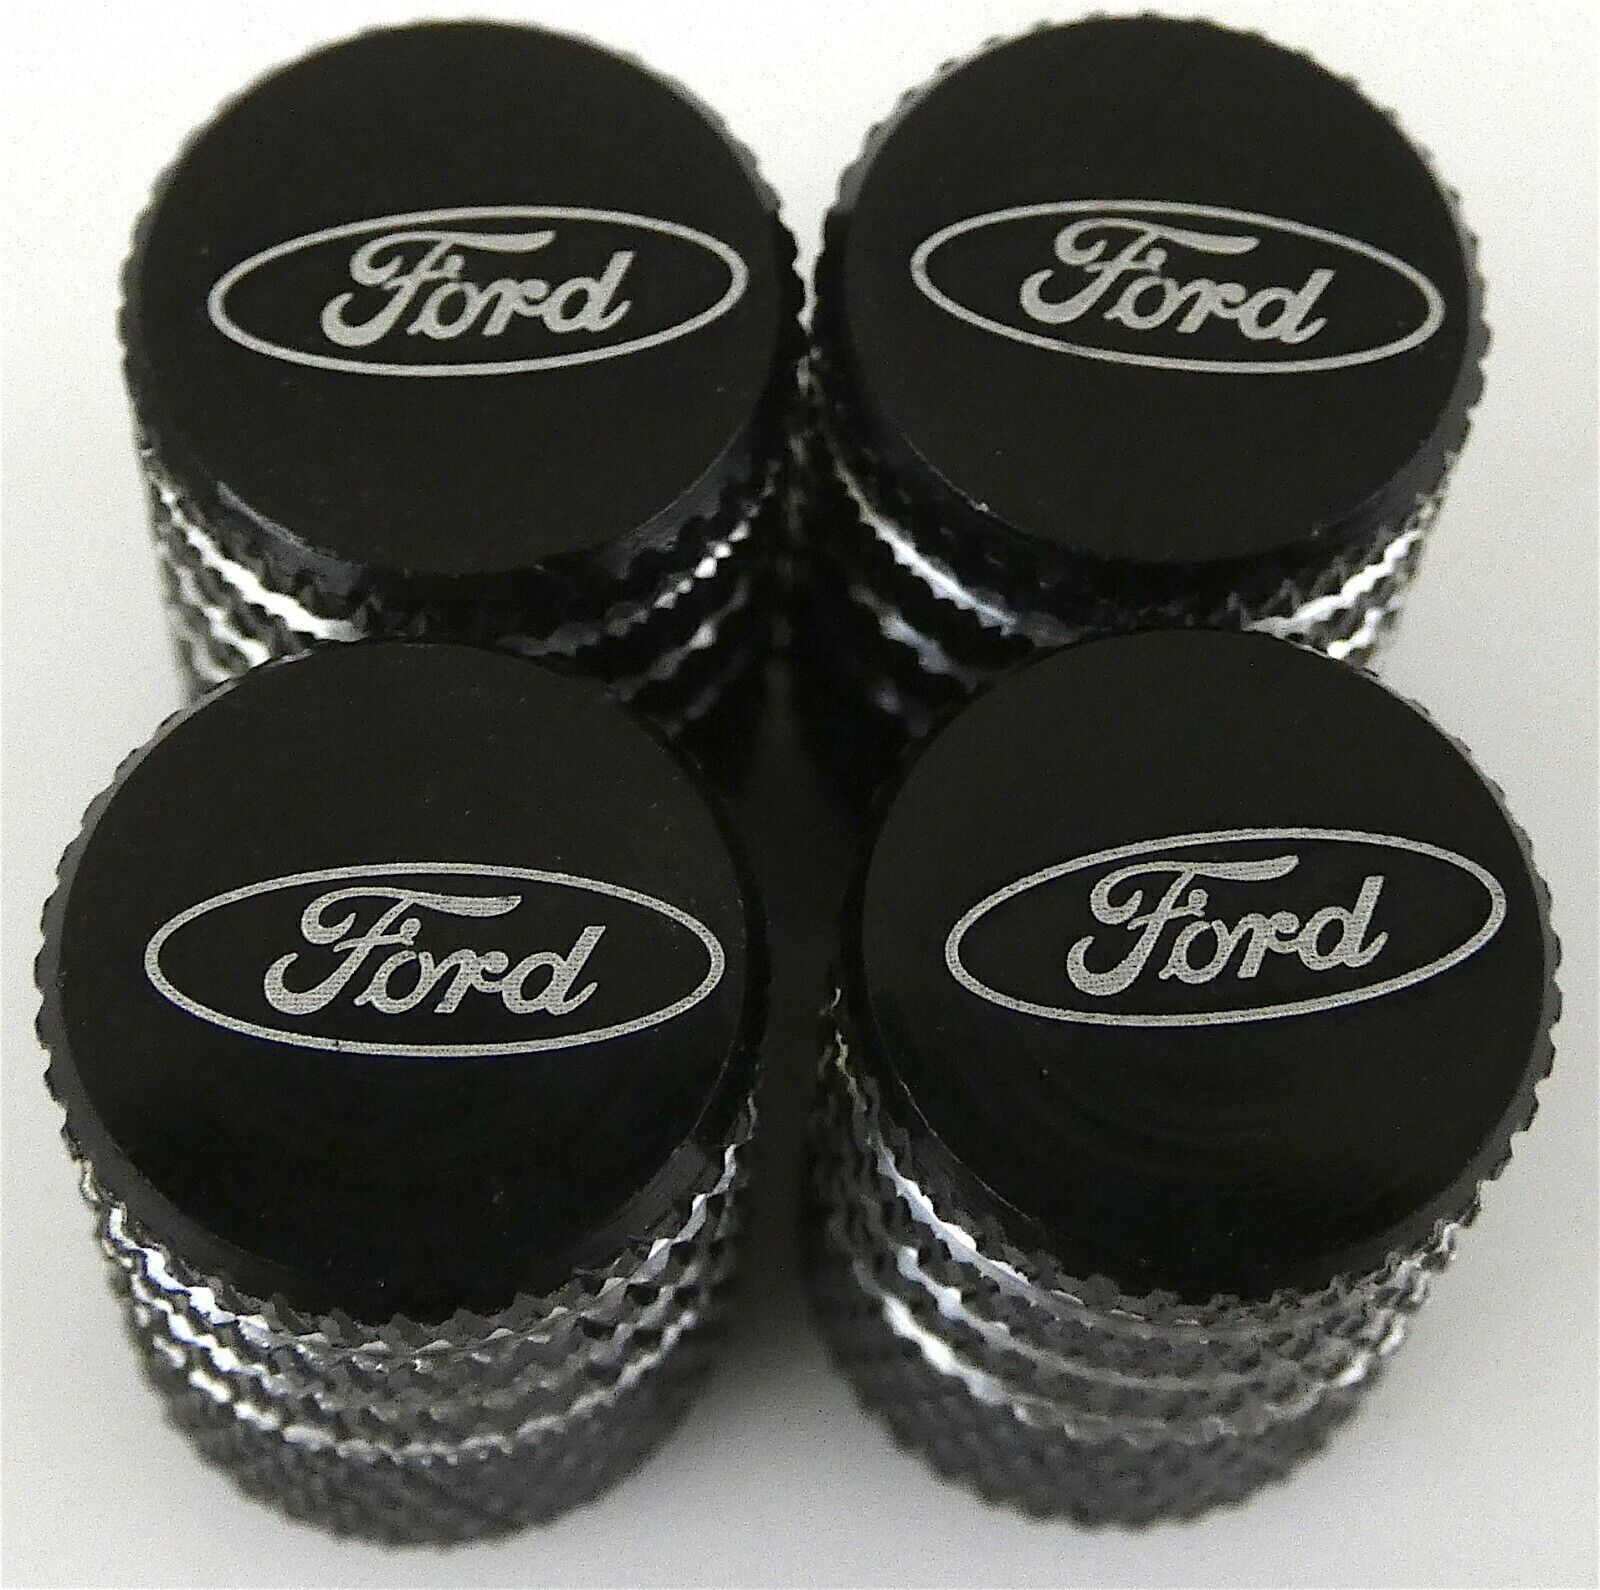 4 Black Ford Tire Valve Stem Caps For Truck Car Universal Fitting 